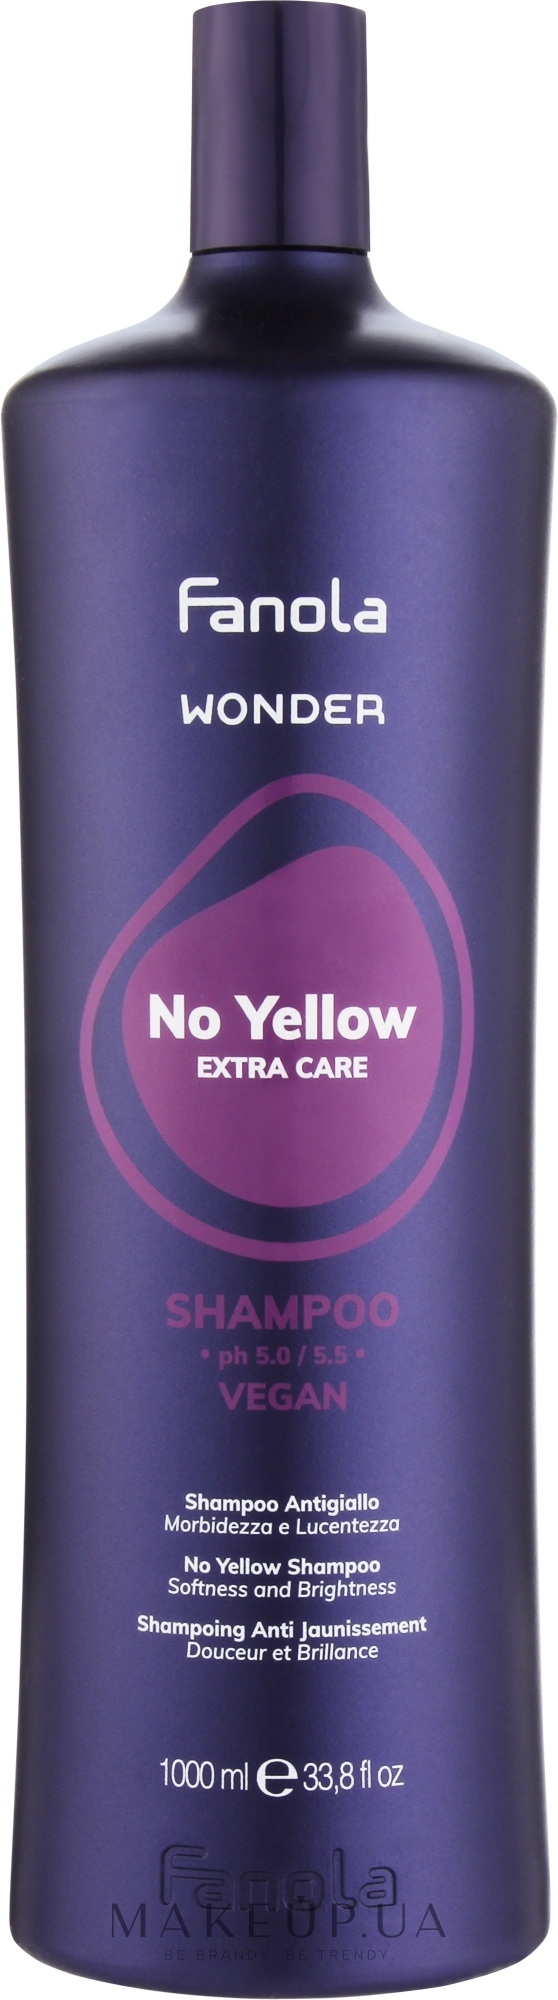 Шампунь антижелтый для волос - Fanola Wonder No Yellow Extra Care Shampoo — фото 1000ml